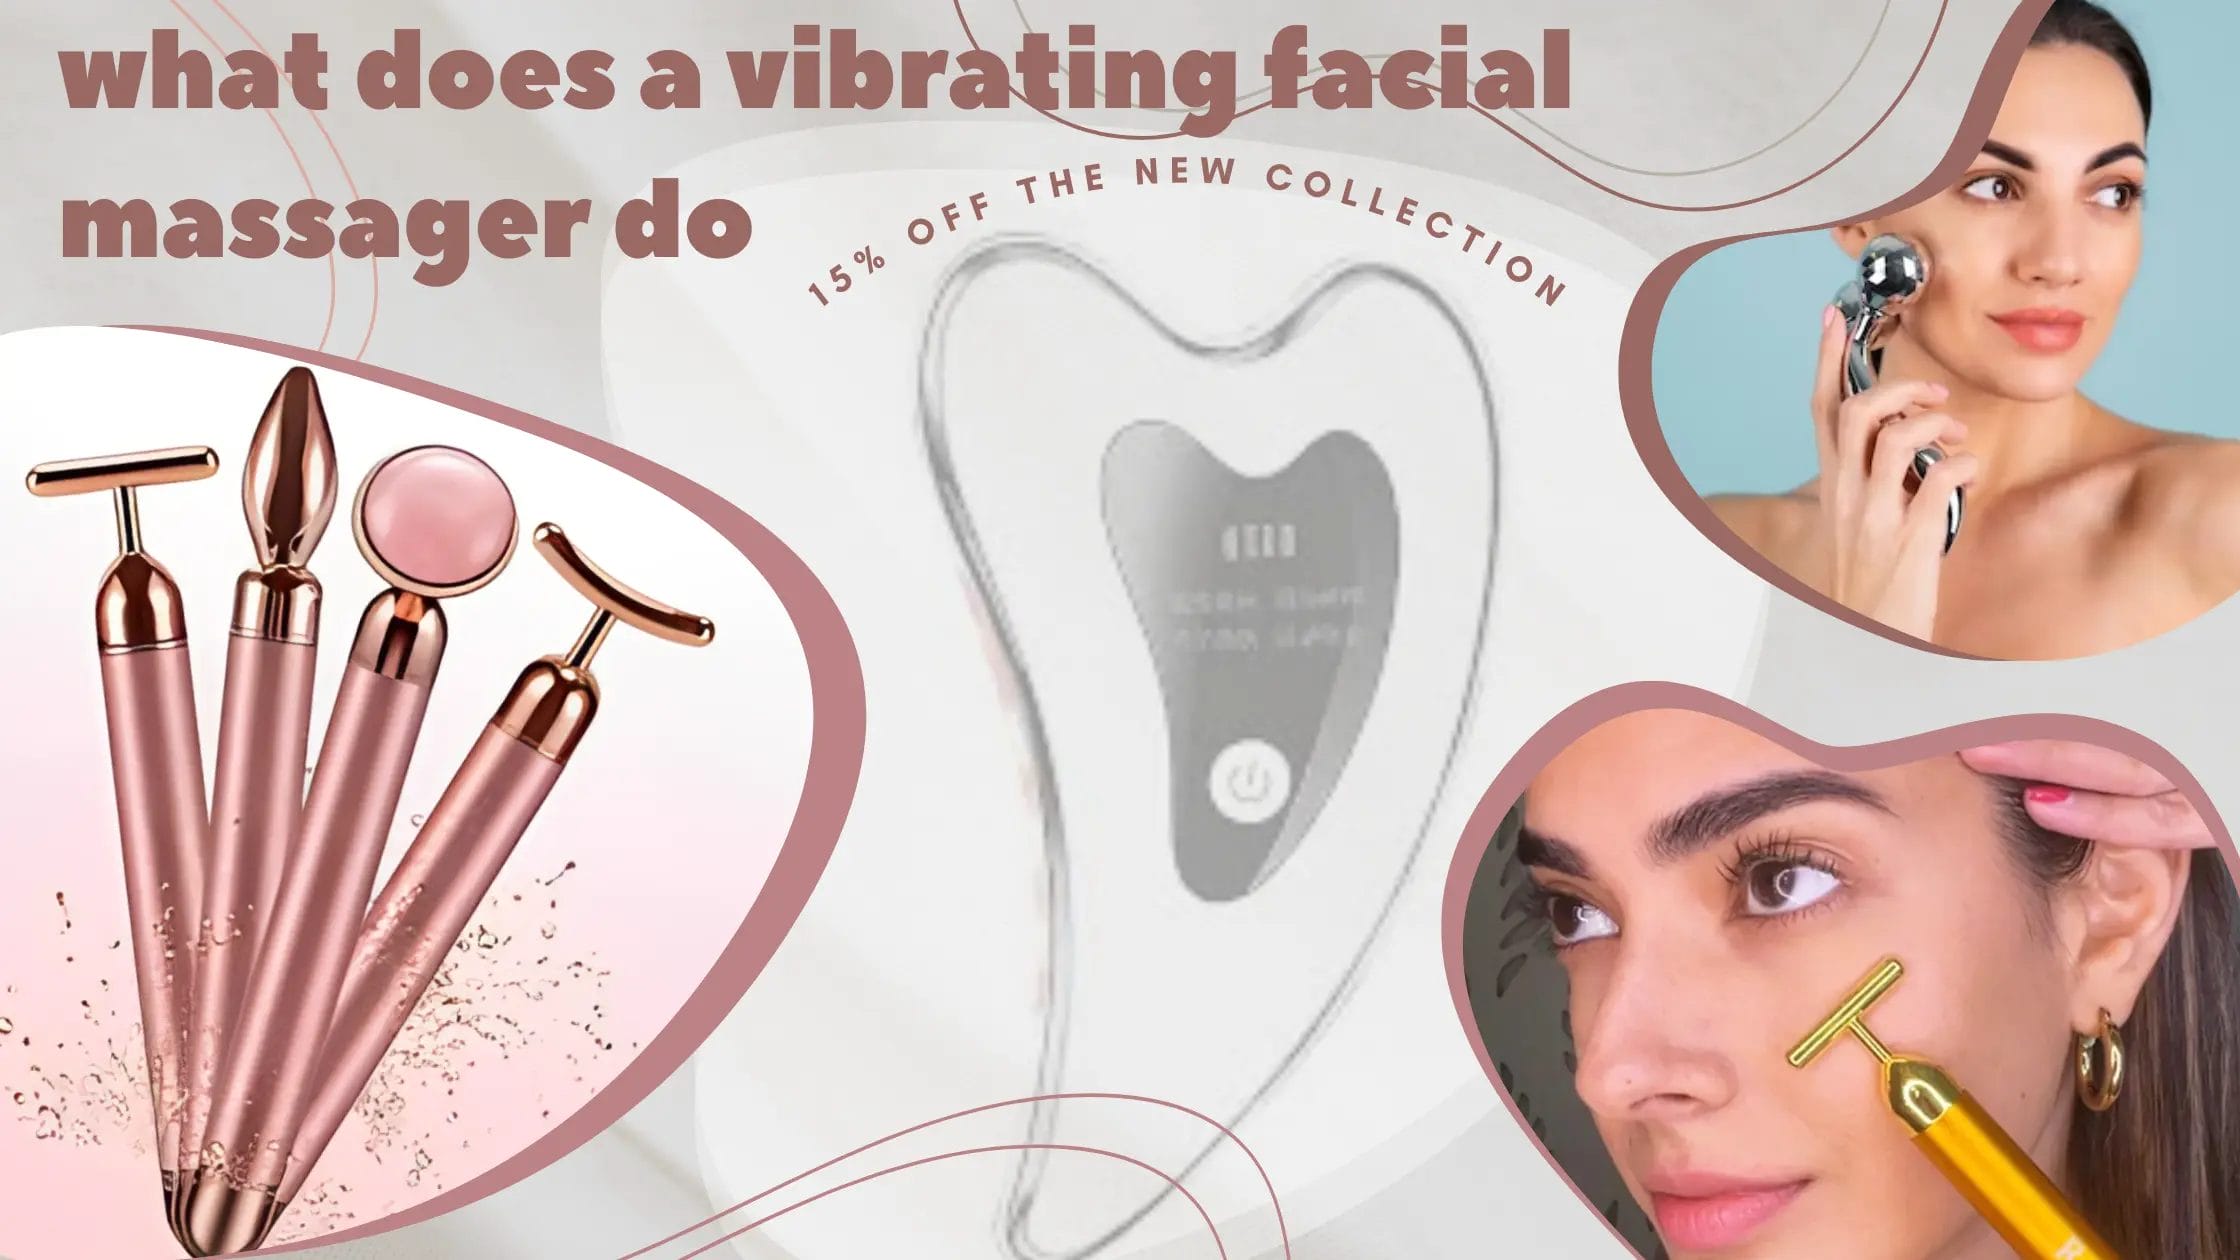 facial vibration massager